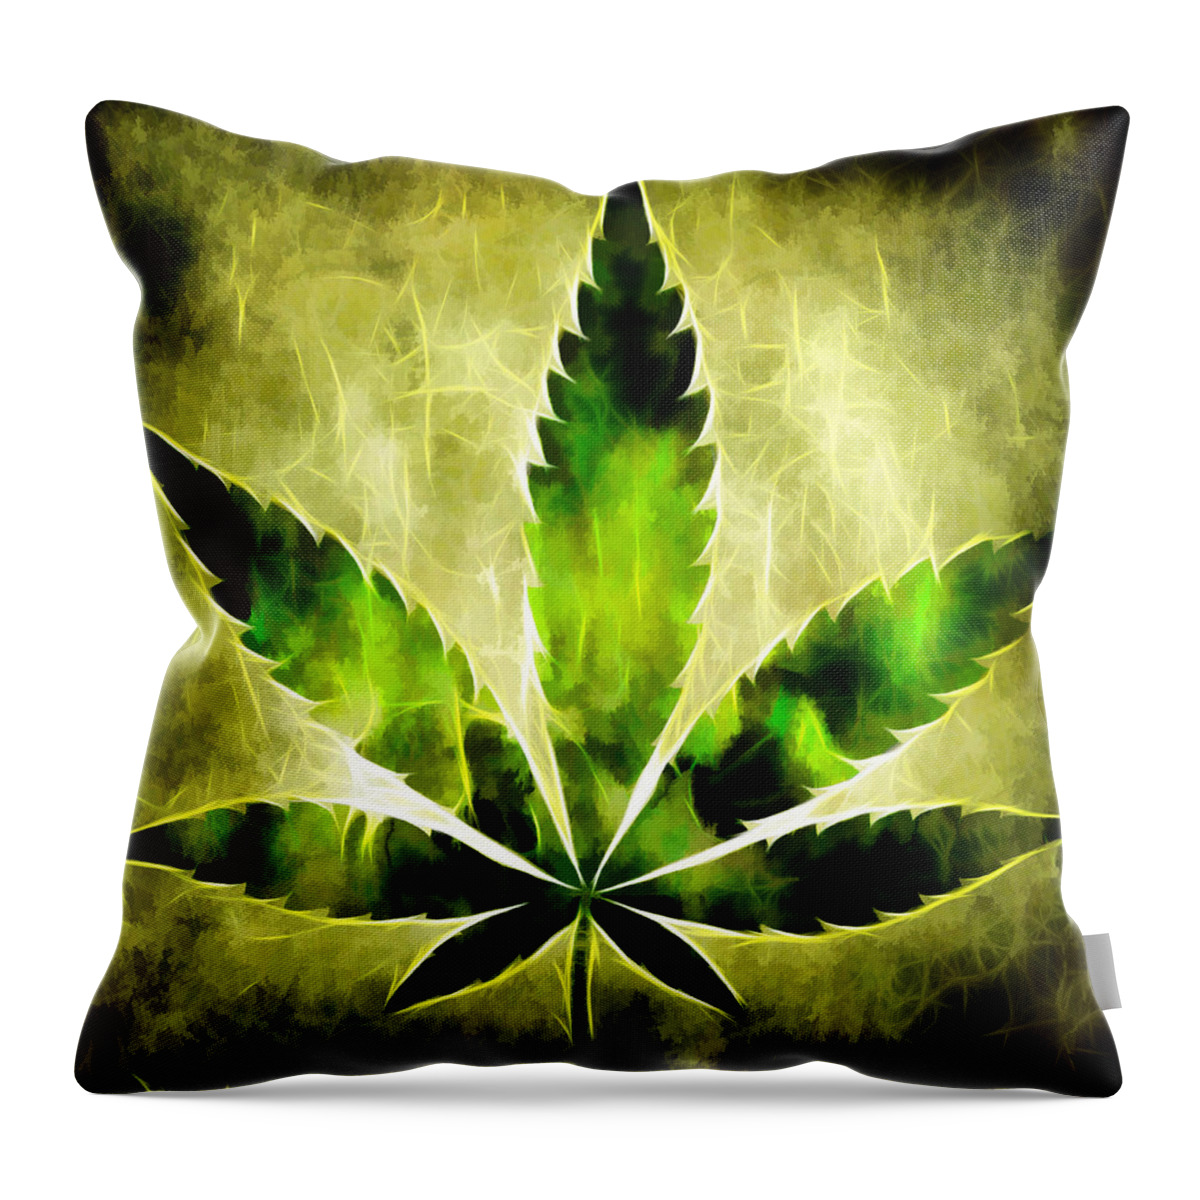 Marijuana Leaf Throw Pillow featuring the photograph Marijuana Leaf Smokin by Athena Mckinzie